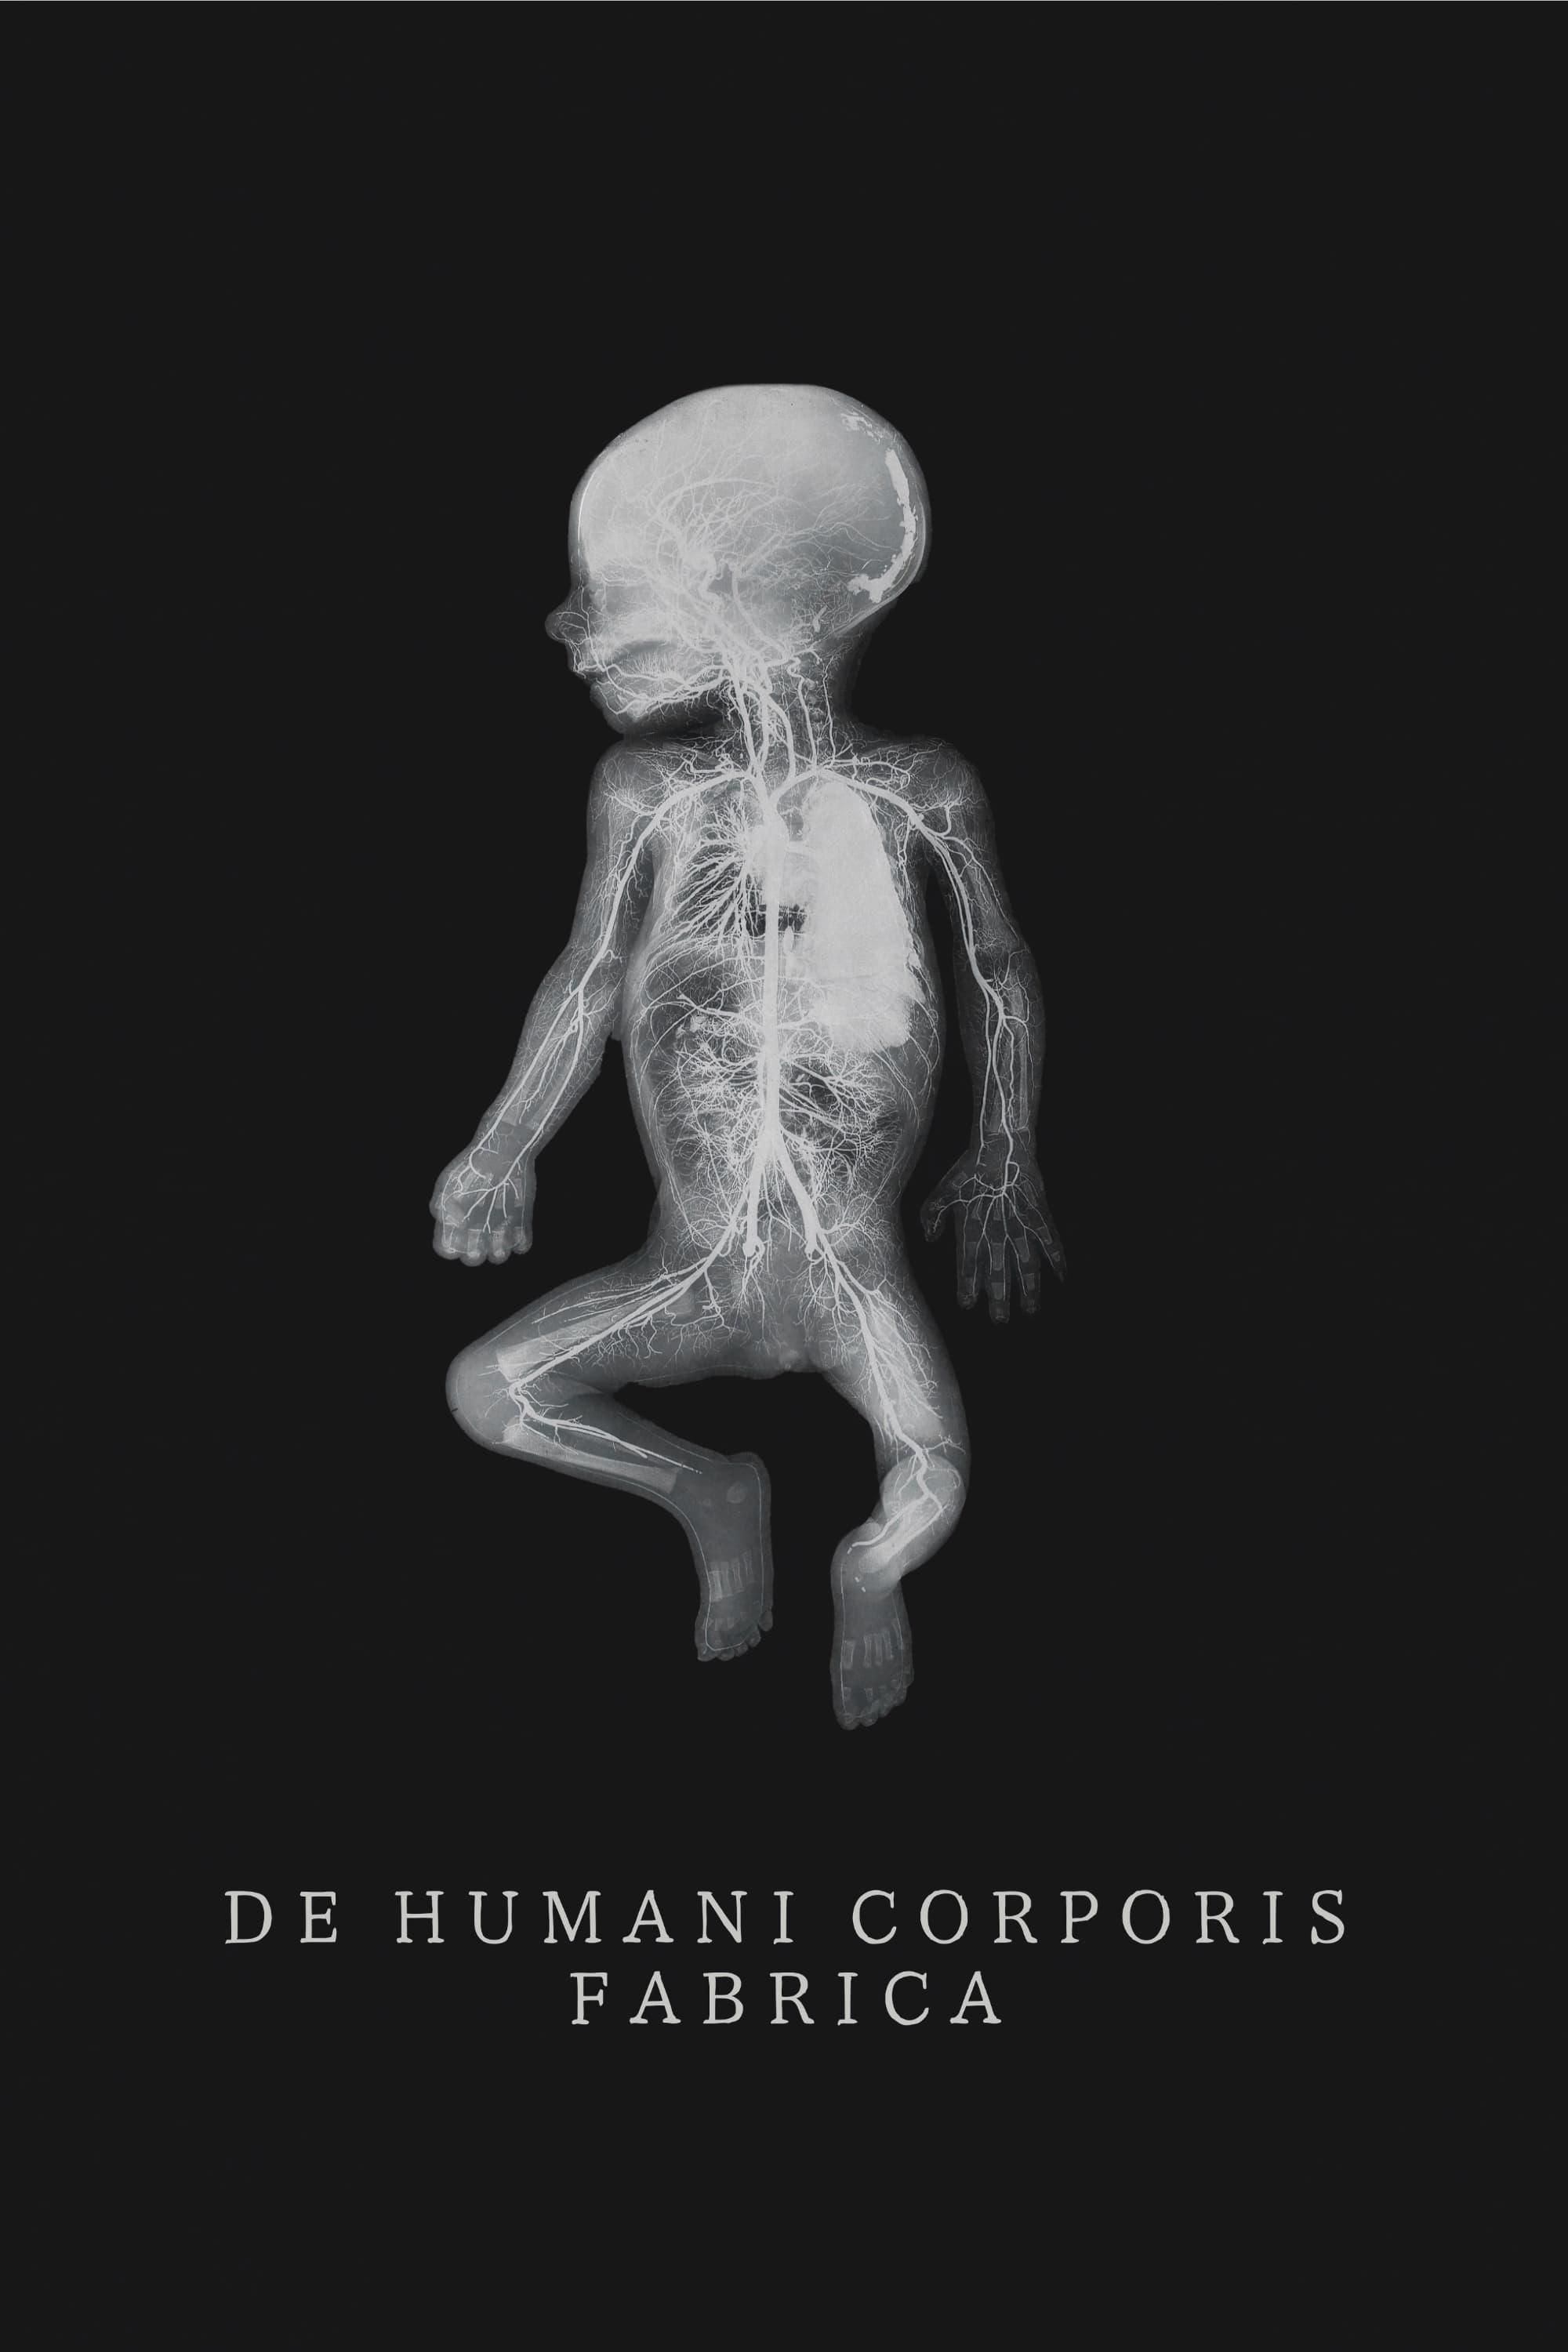 De Humani Corporis Fabrica poster